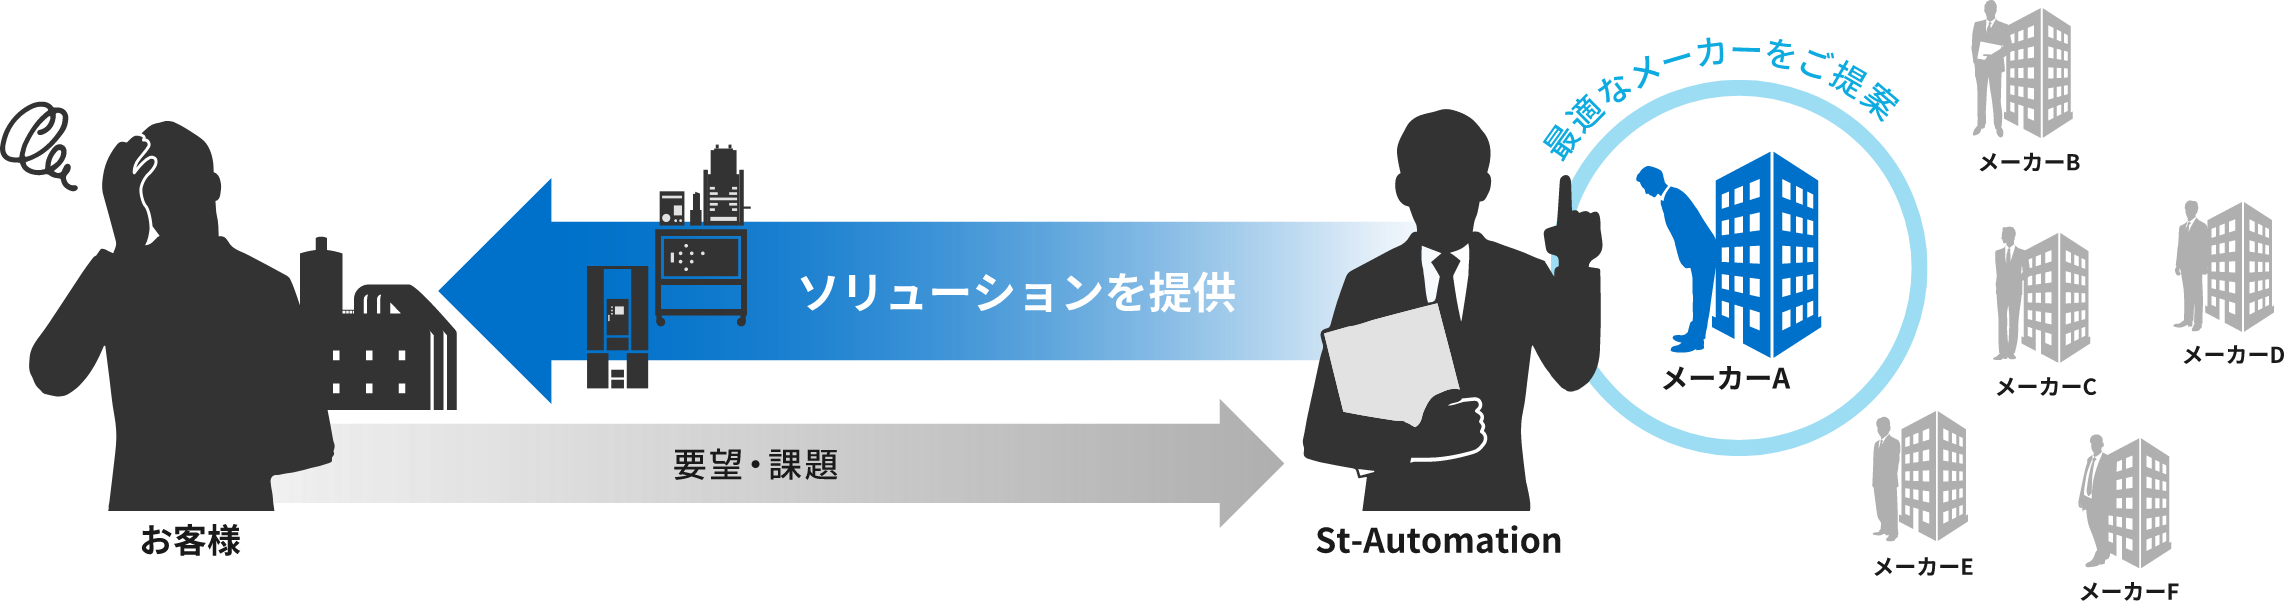 St-Automation 設計力と技術力